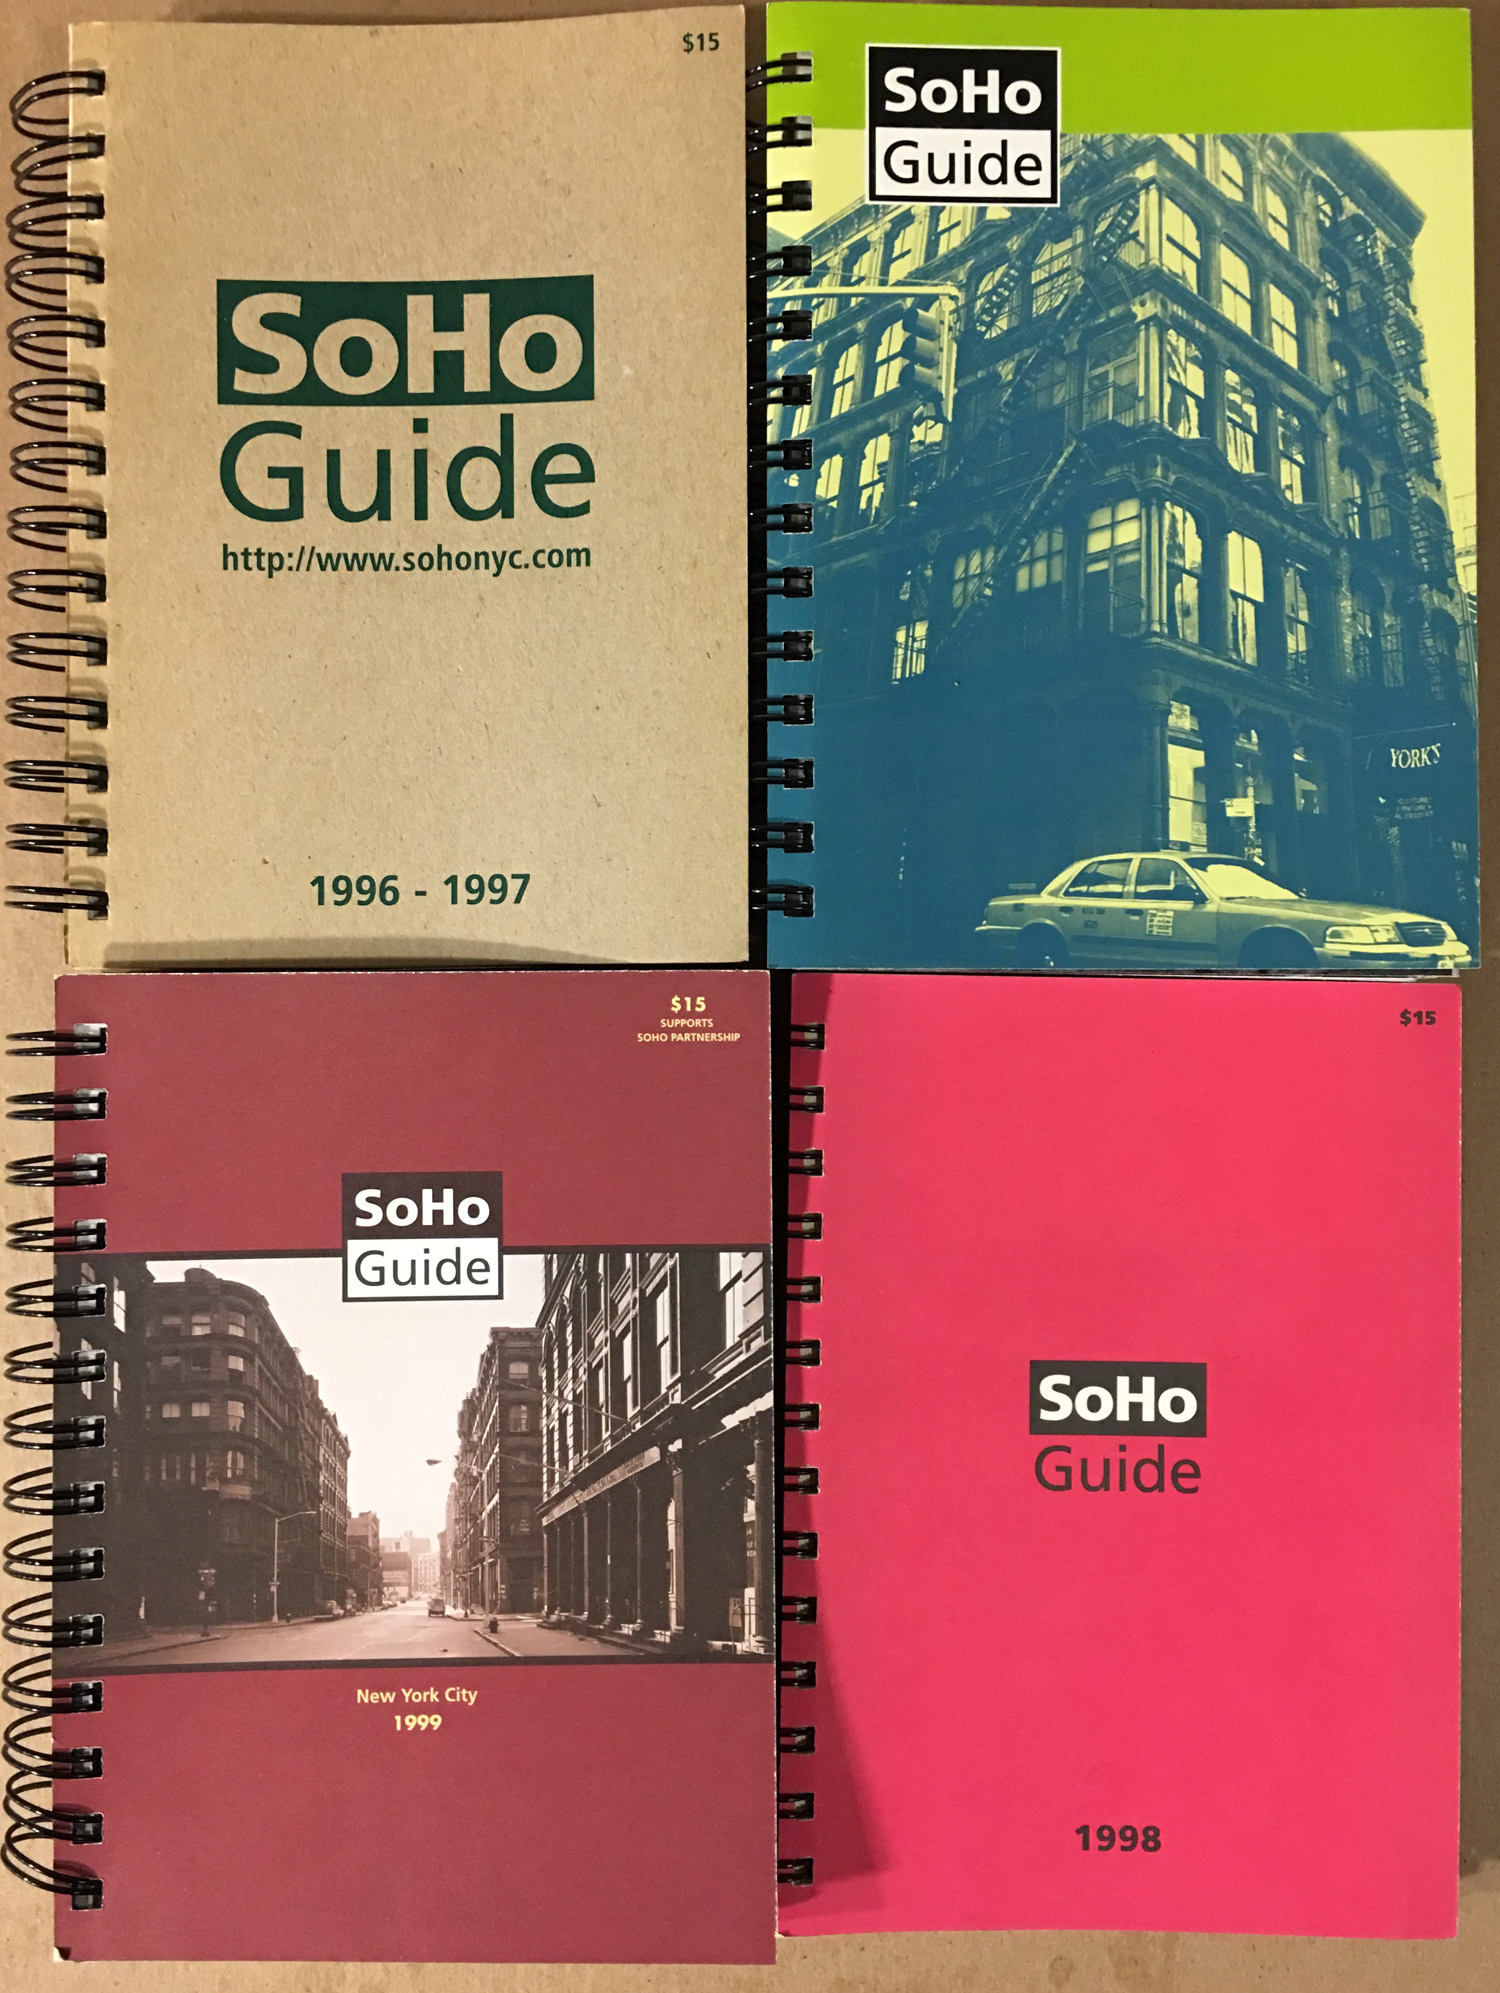 SoHo guide Covers